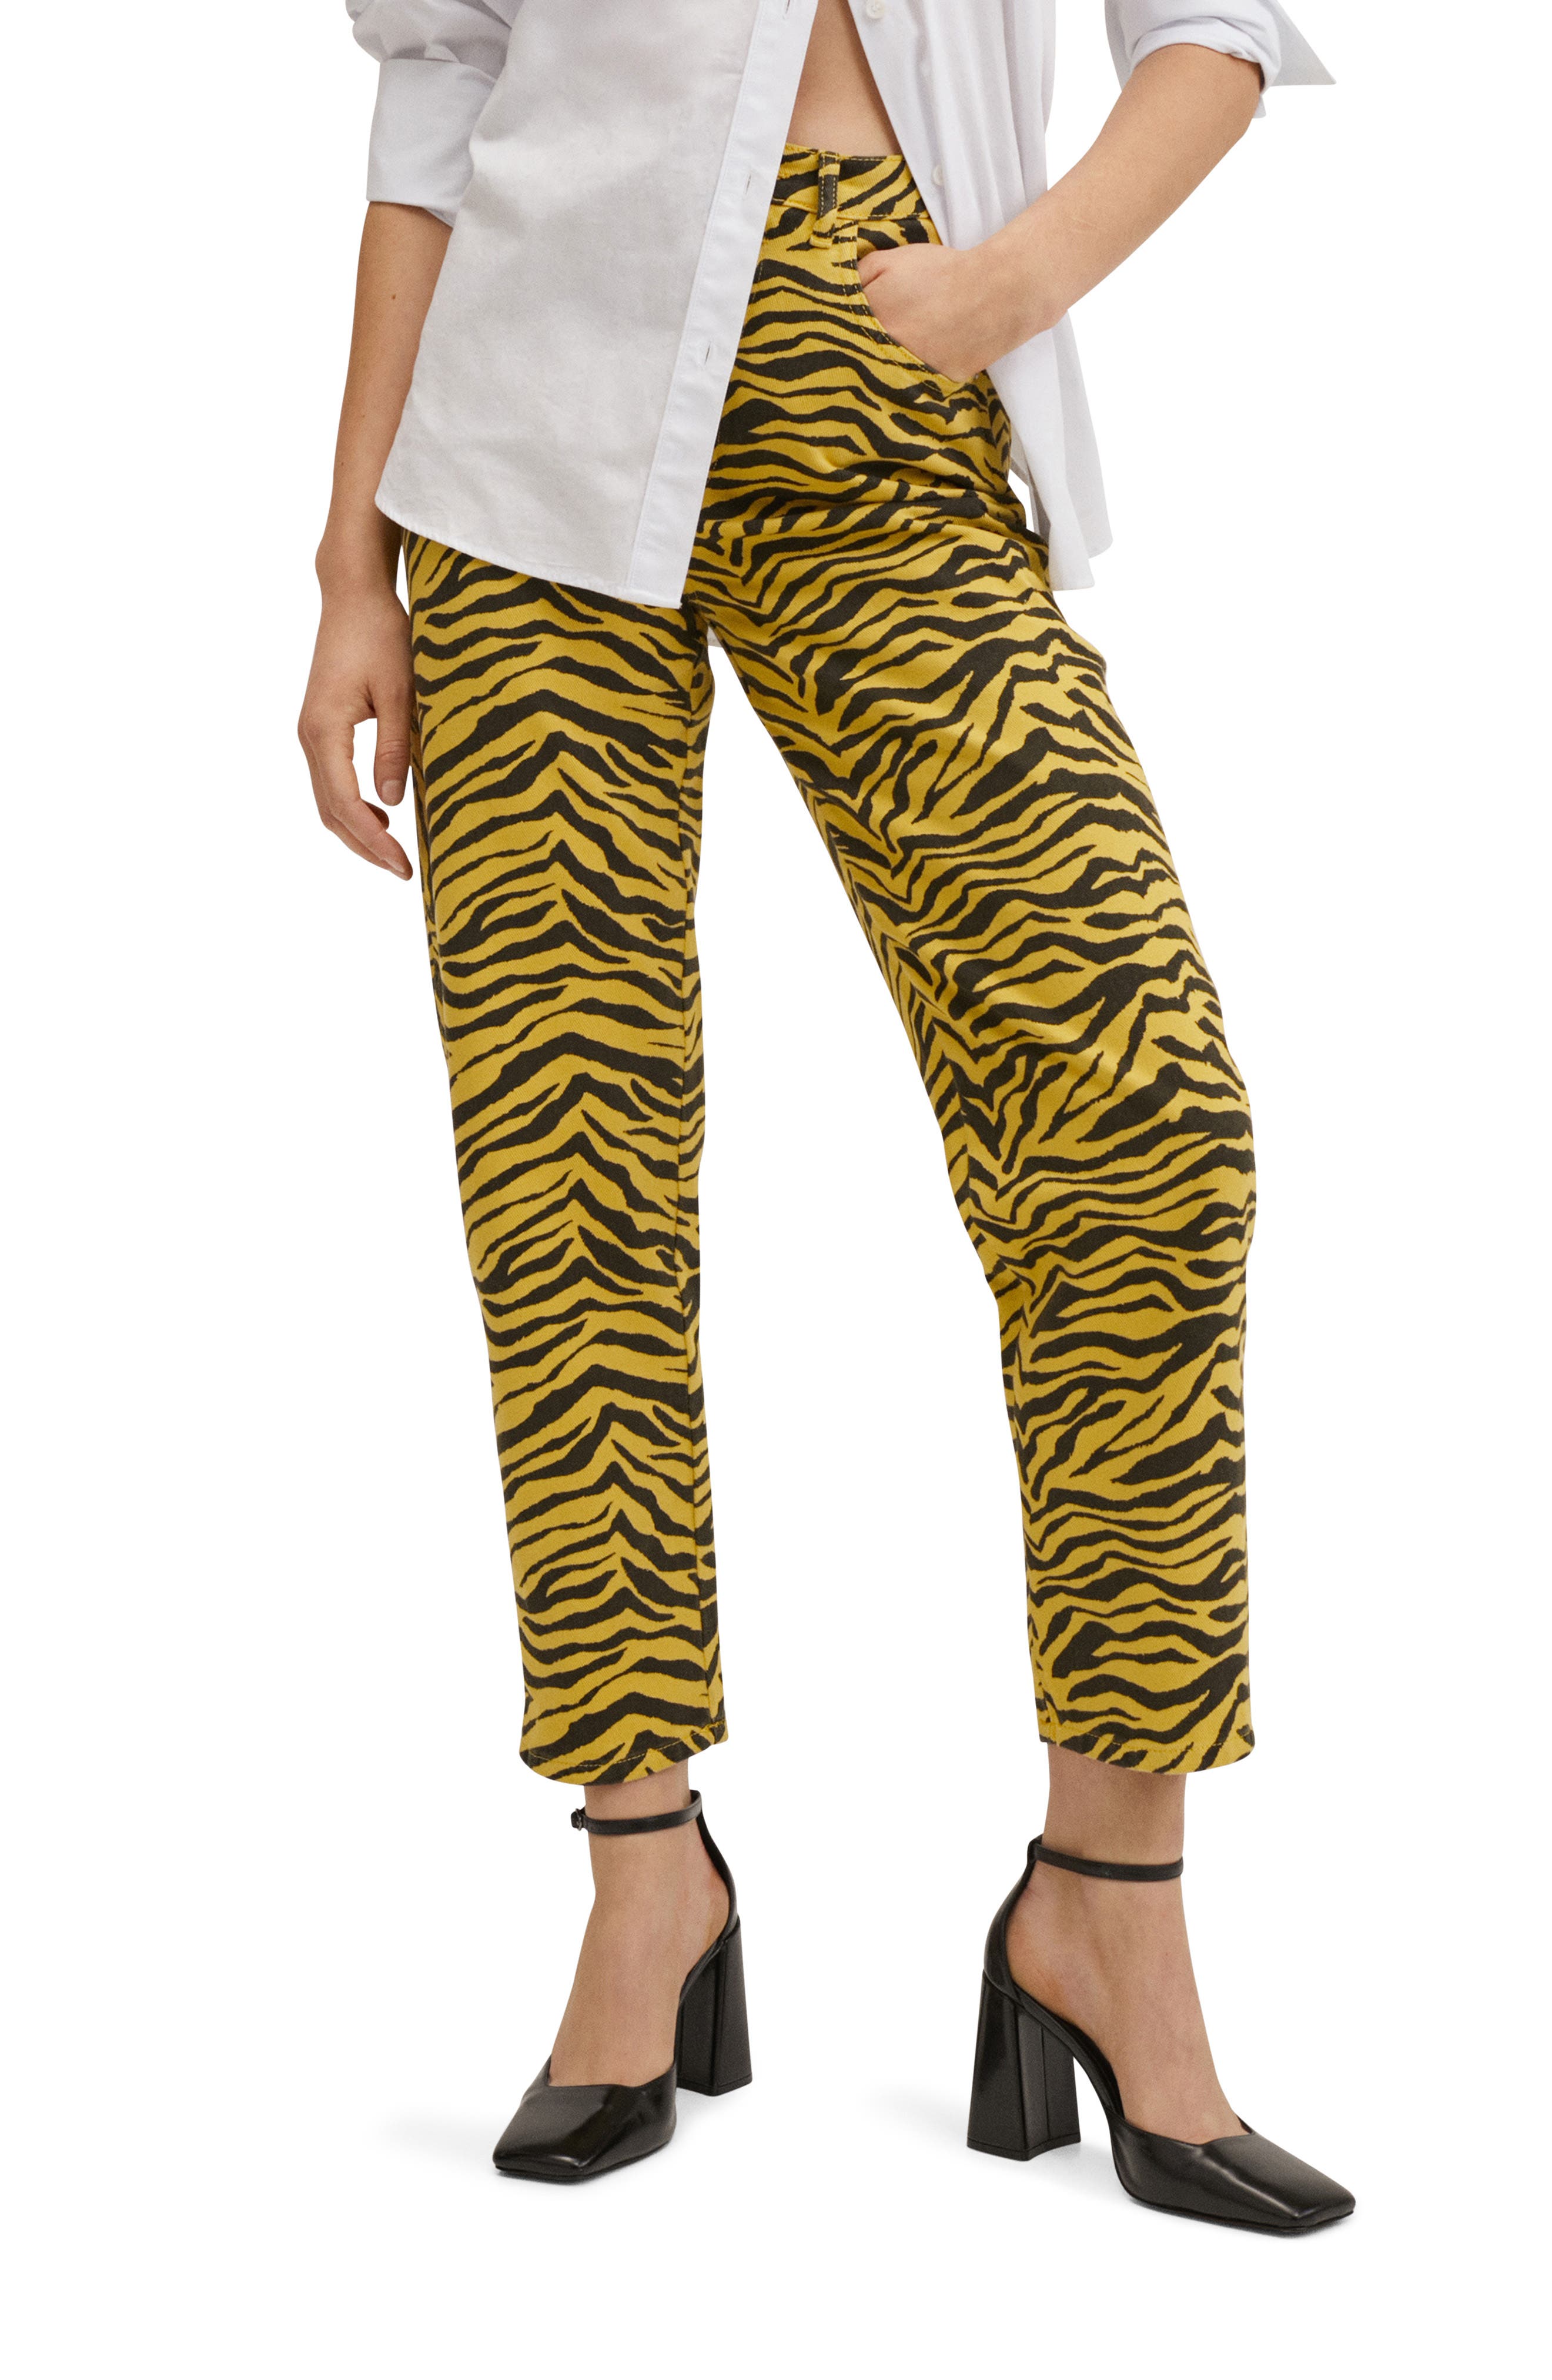 Fancy Dress Leggings Zebra/Tiger/Giraffe/Leopard Print Girls/Ladies All Sizes 